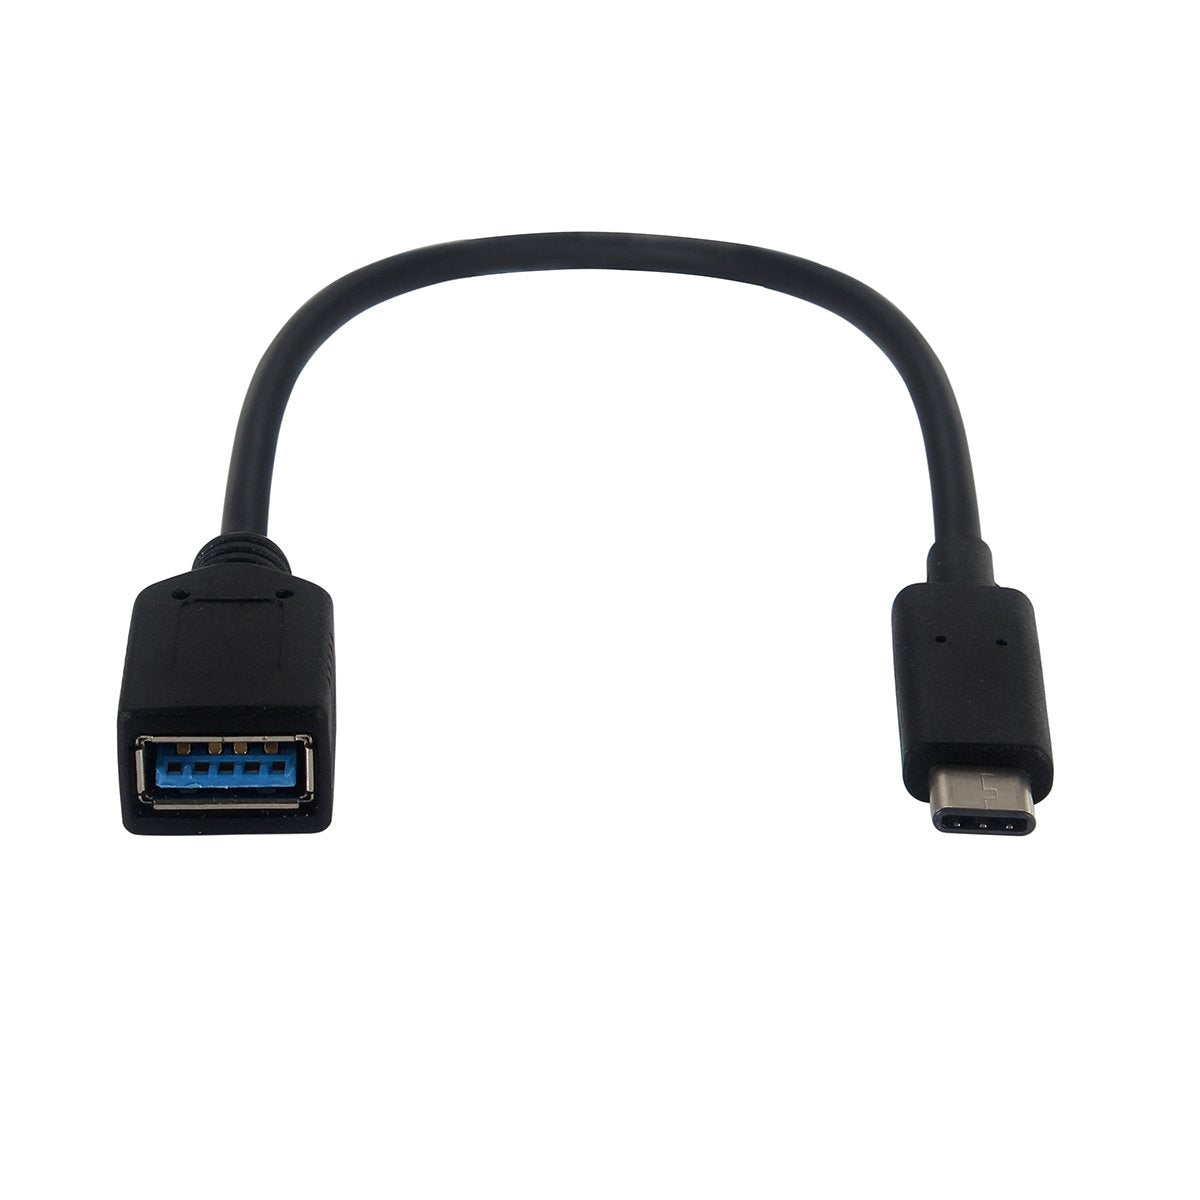 Adaptor Type-C USB-C 3.1 Male to USB 3.0 Female Adapter Laptop Phone Connector OTG Host - Black